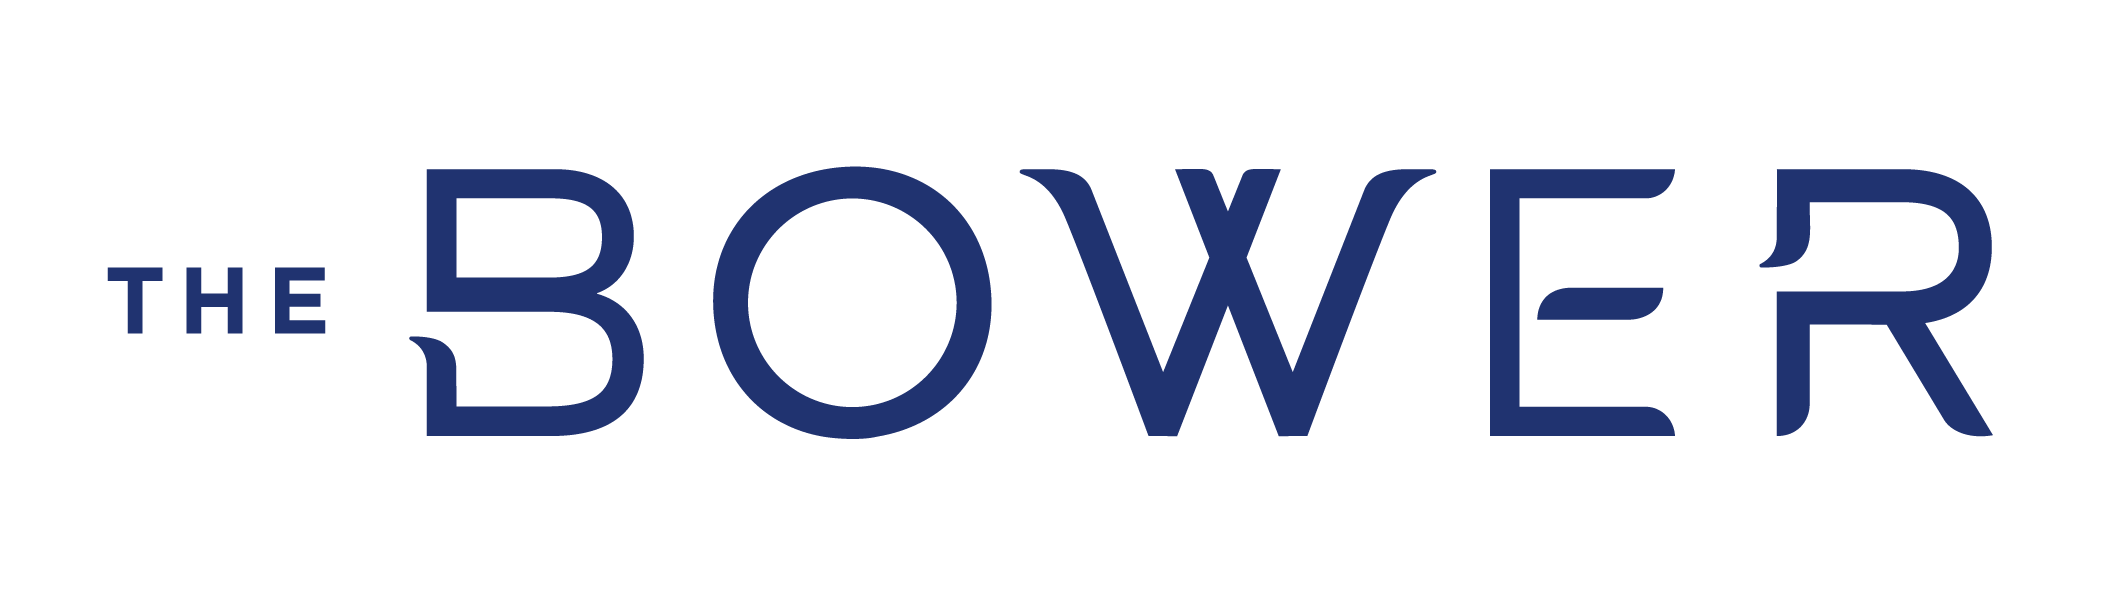 The Bower logo